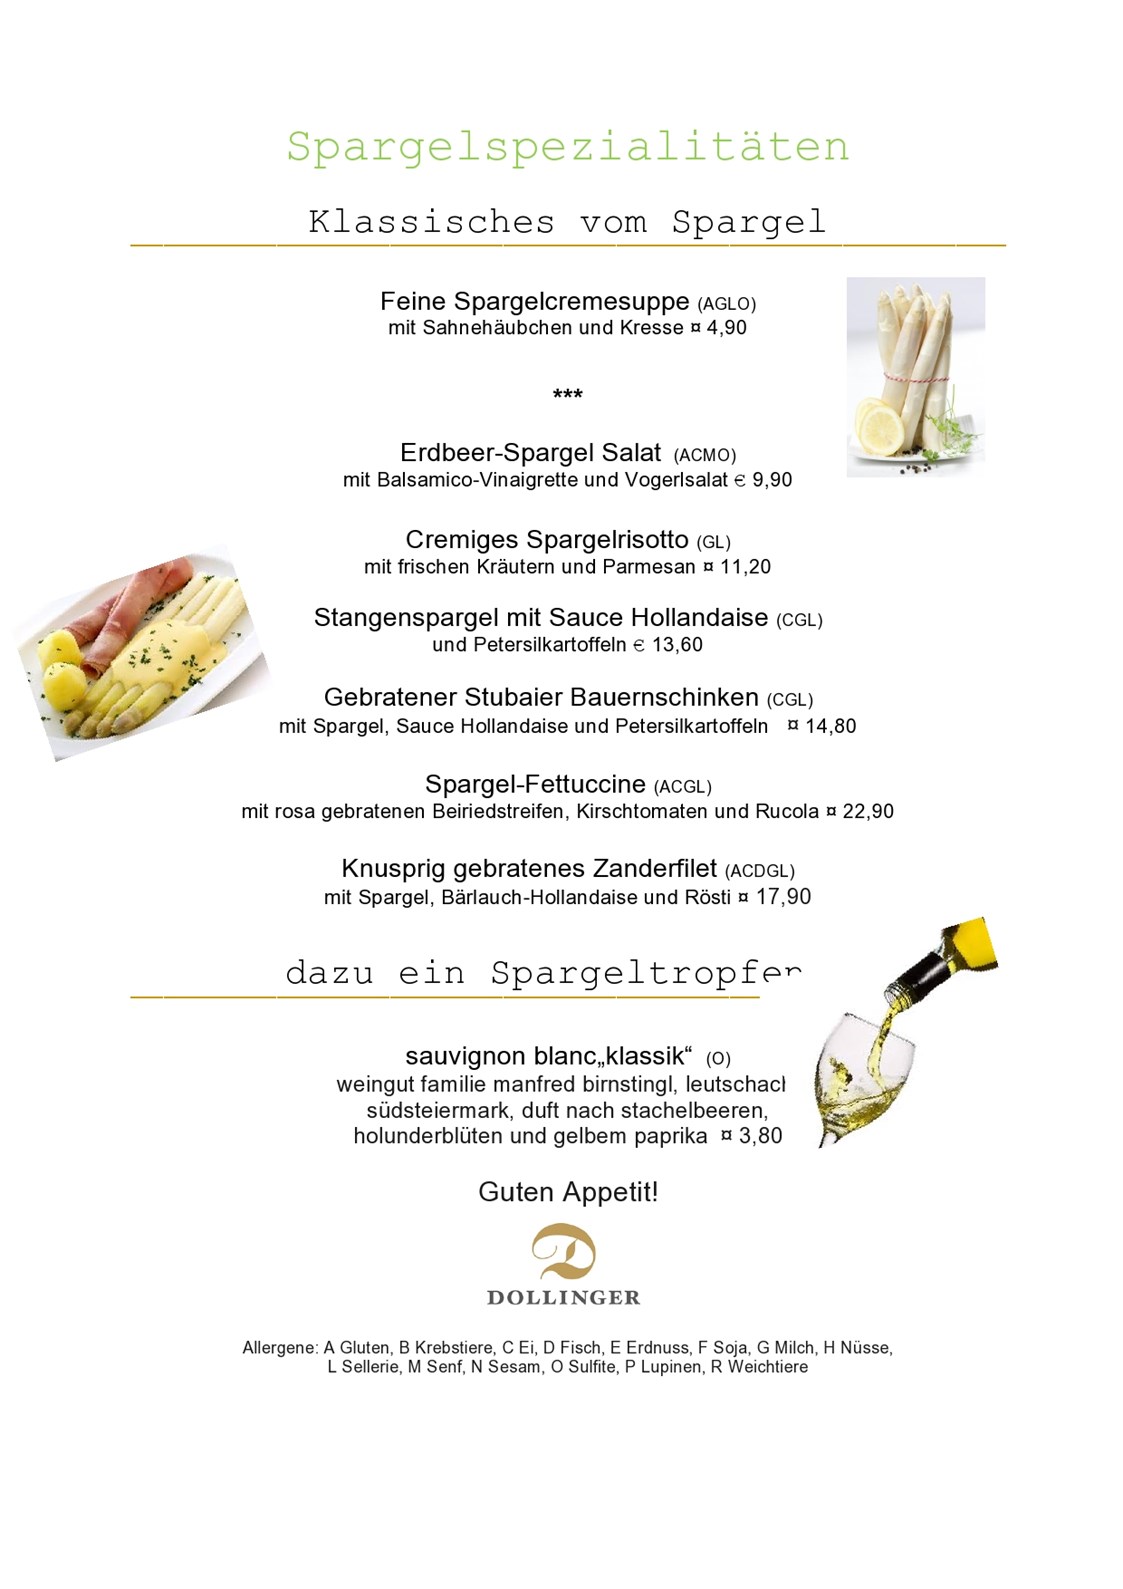 Restaurant: Aktuell bei uns ab Ende April 2019: Spargel in allen Variationen! - Restaurant Dollinger